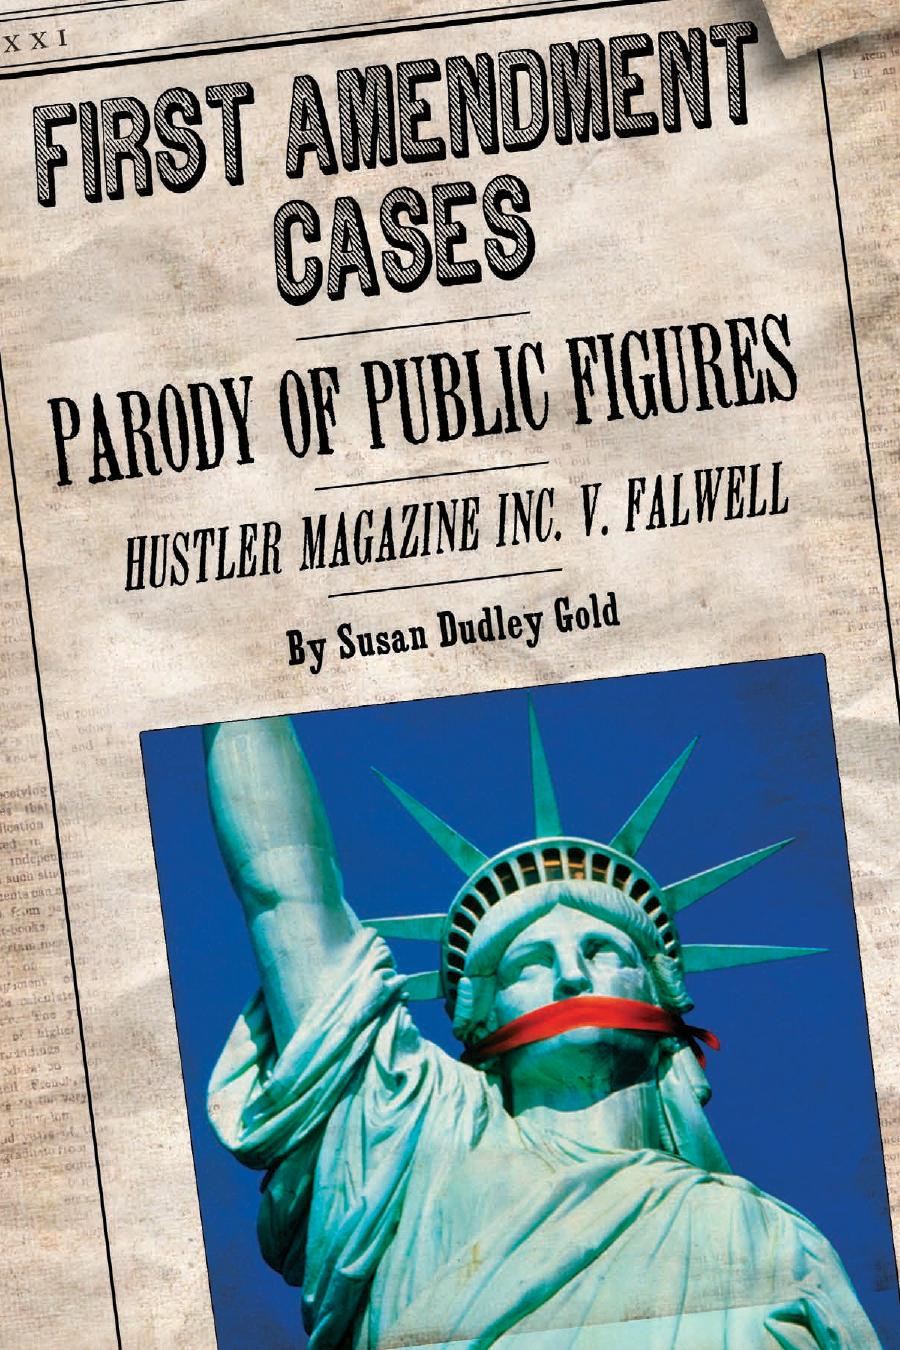 Parody of Public Figures: Hustler Magazine V. Falwell by Susan Dudley Gold